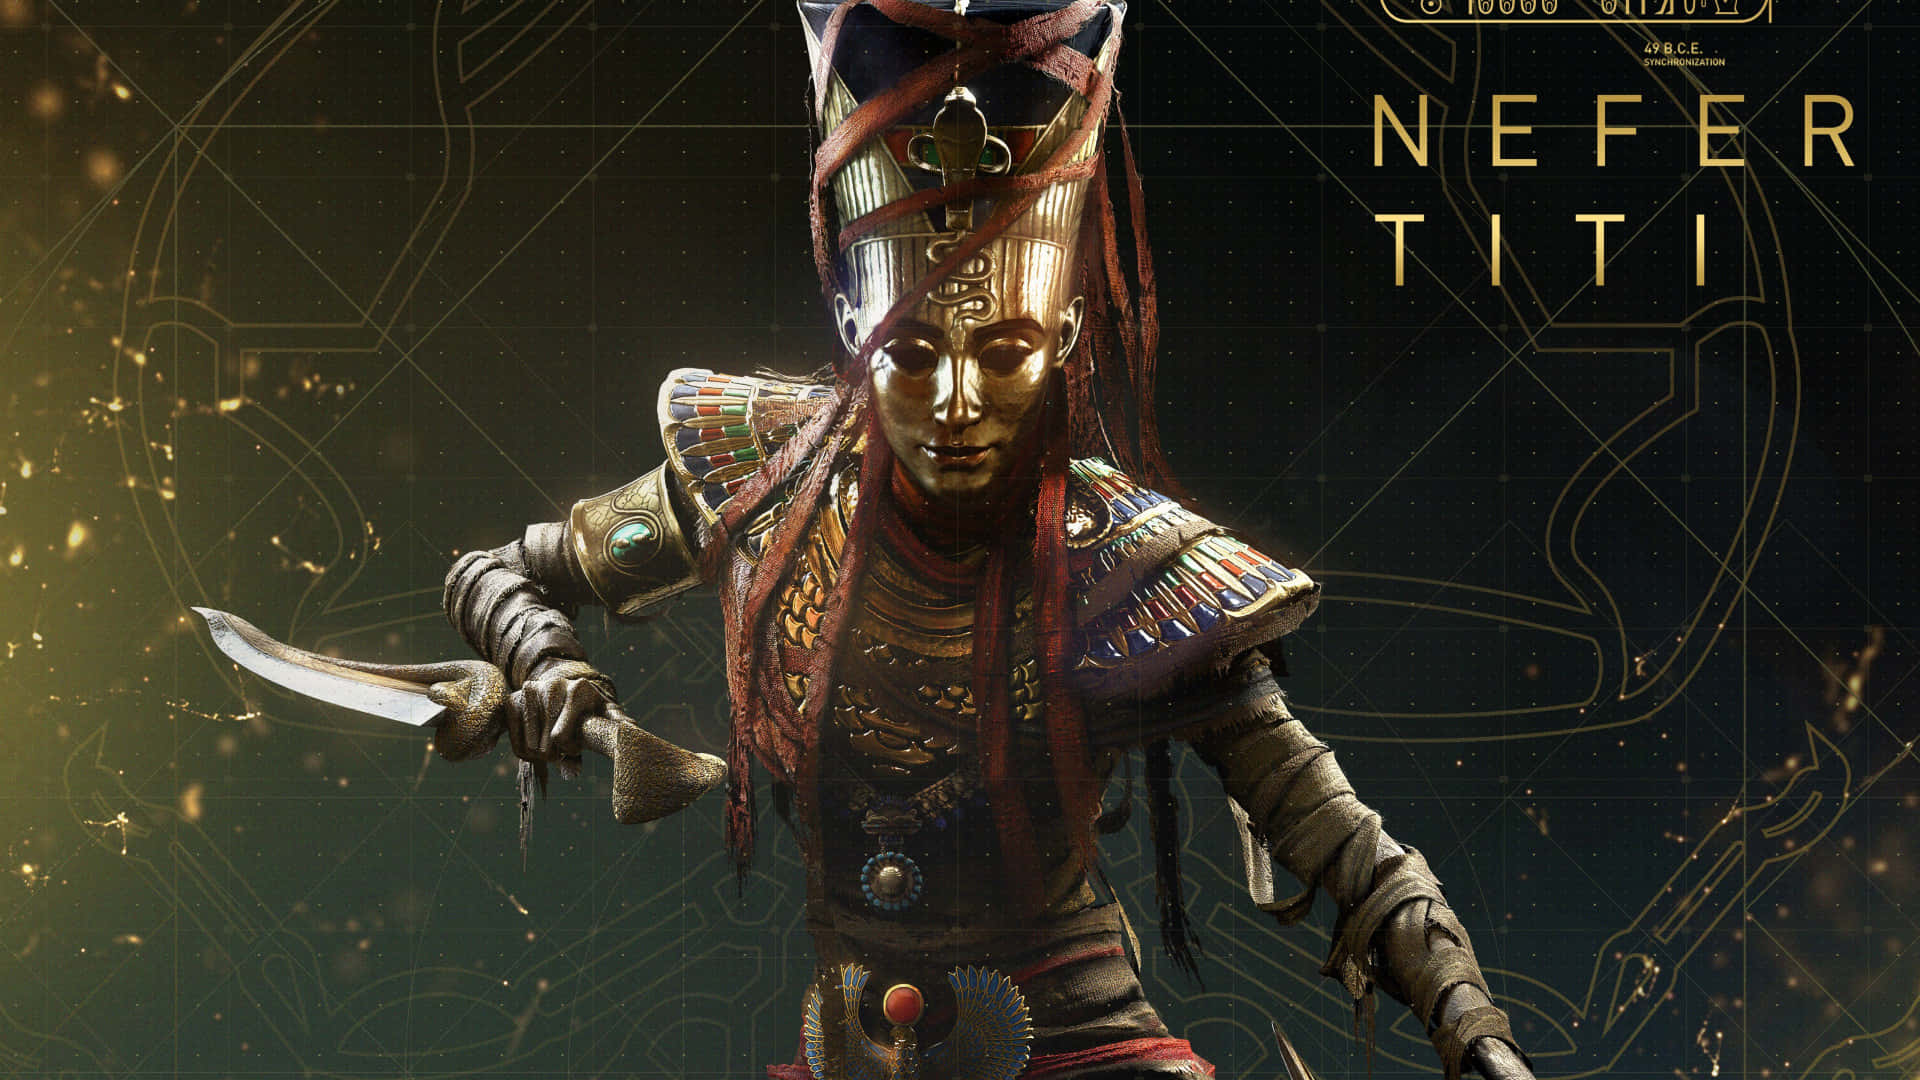 Neferneferuaten Nefertiti 1920x1080 Assassin's Creed Origins Background